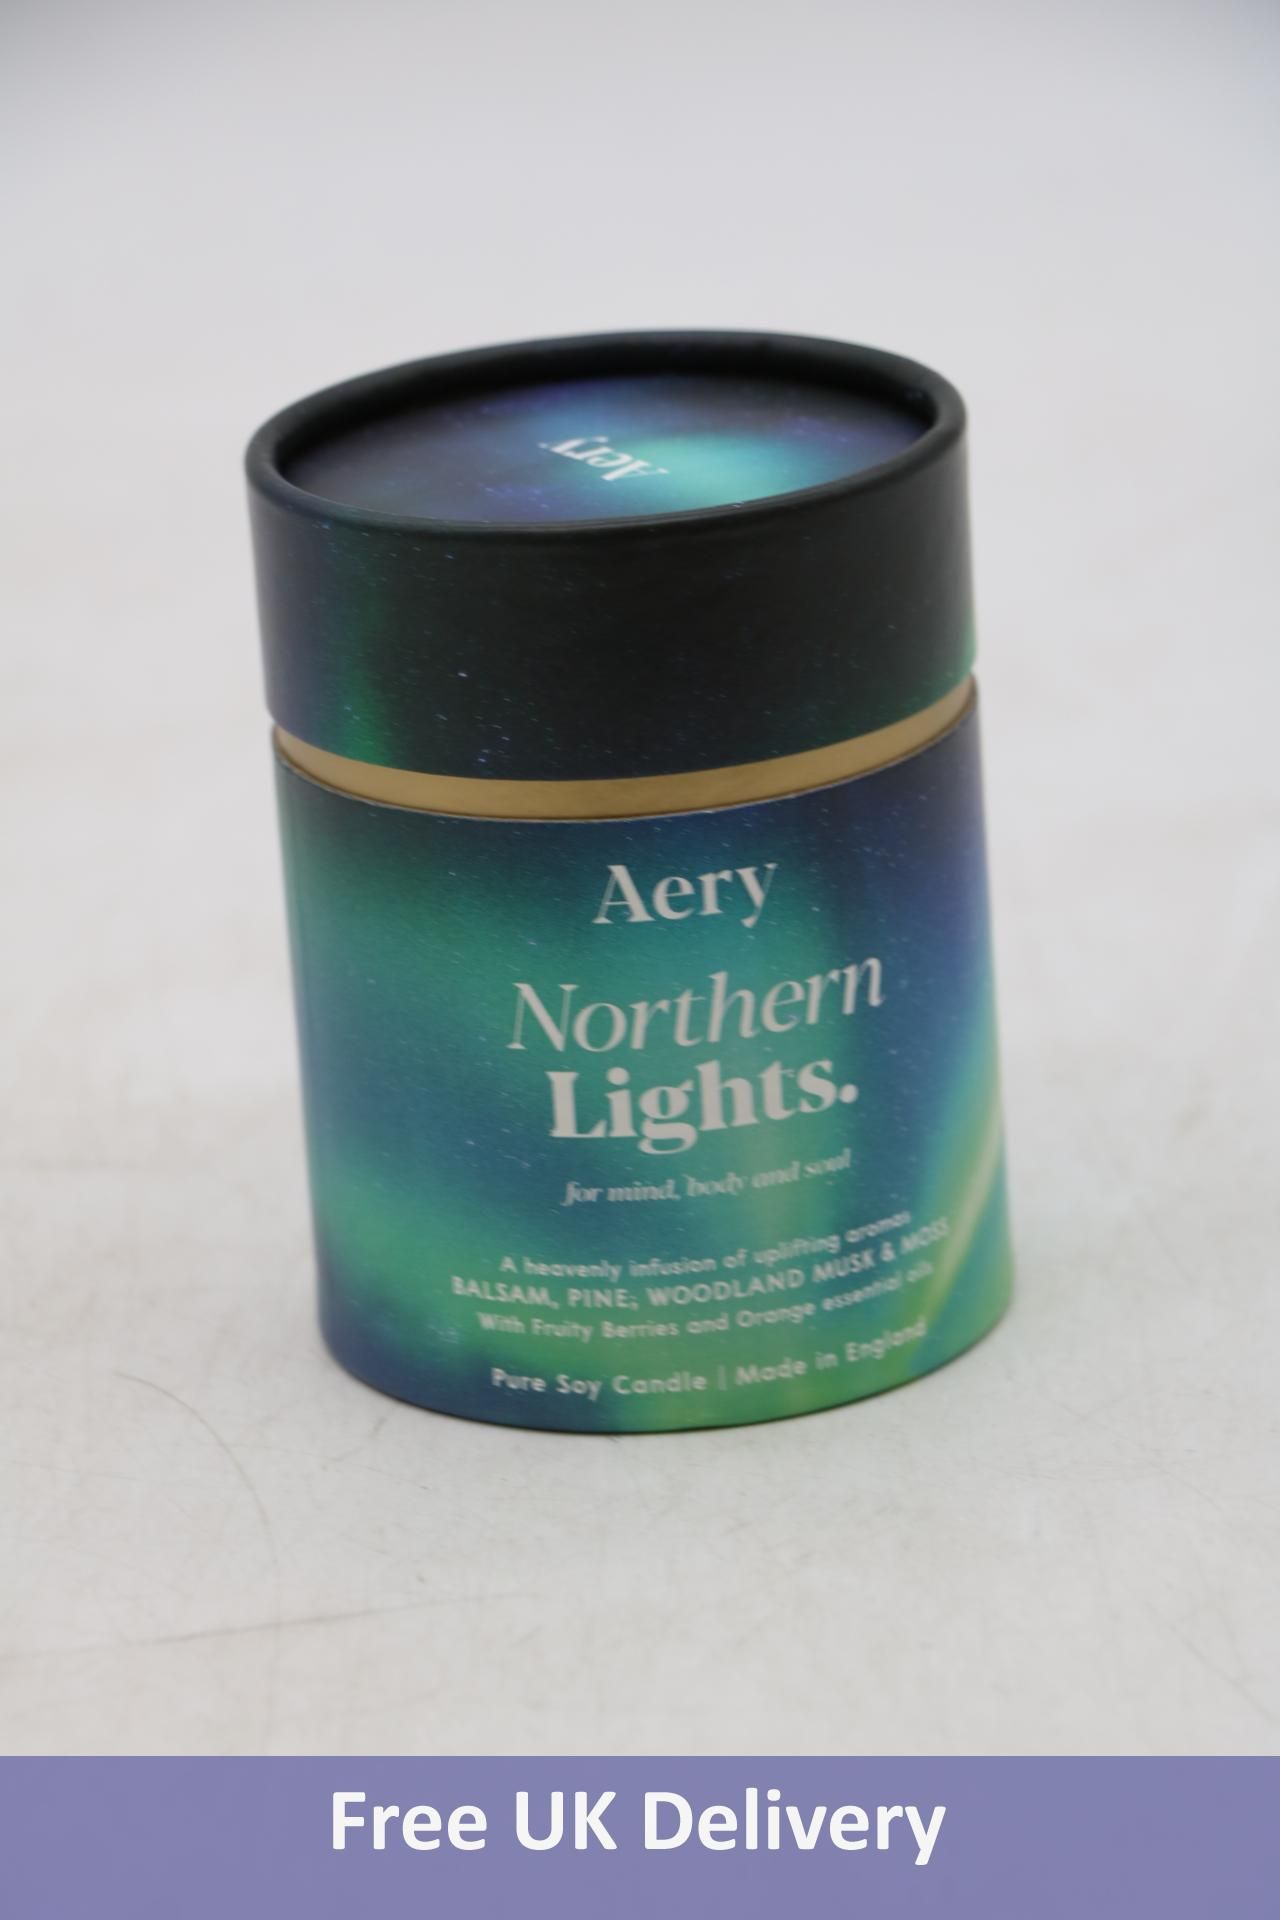 Aery Northern Lights, Balsam, Pine, Woodland Musk & Moss, 200g, Set of Two